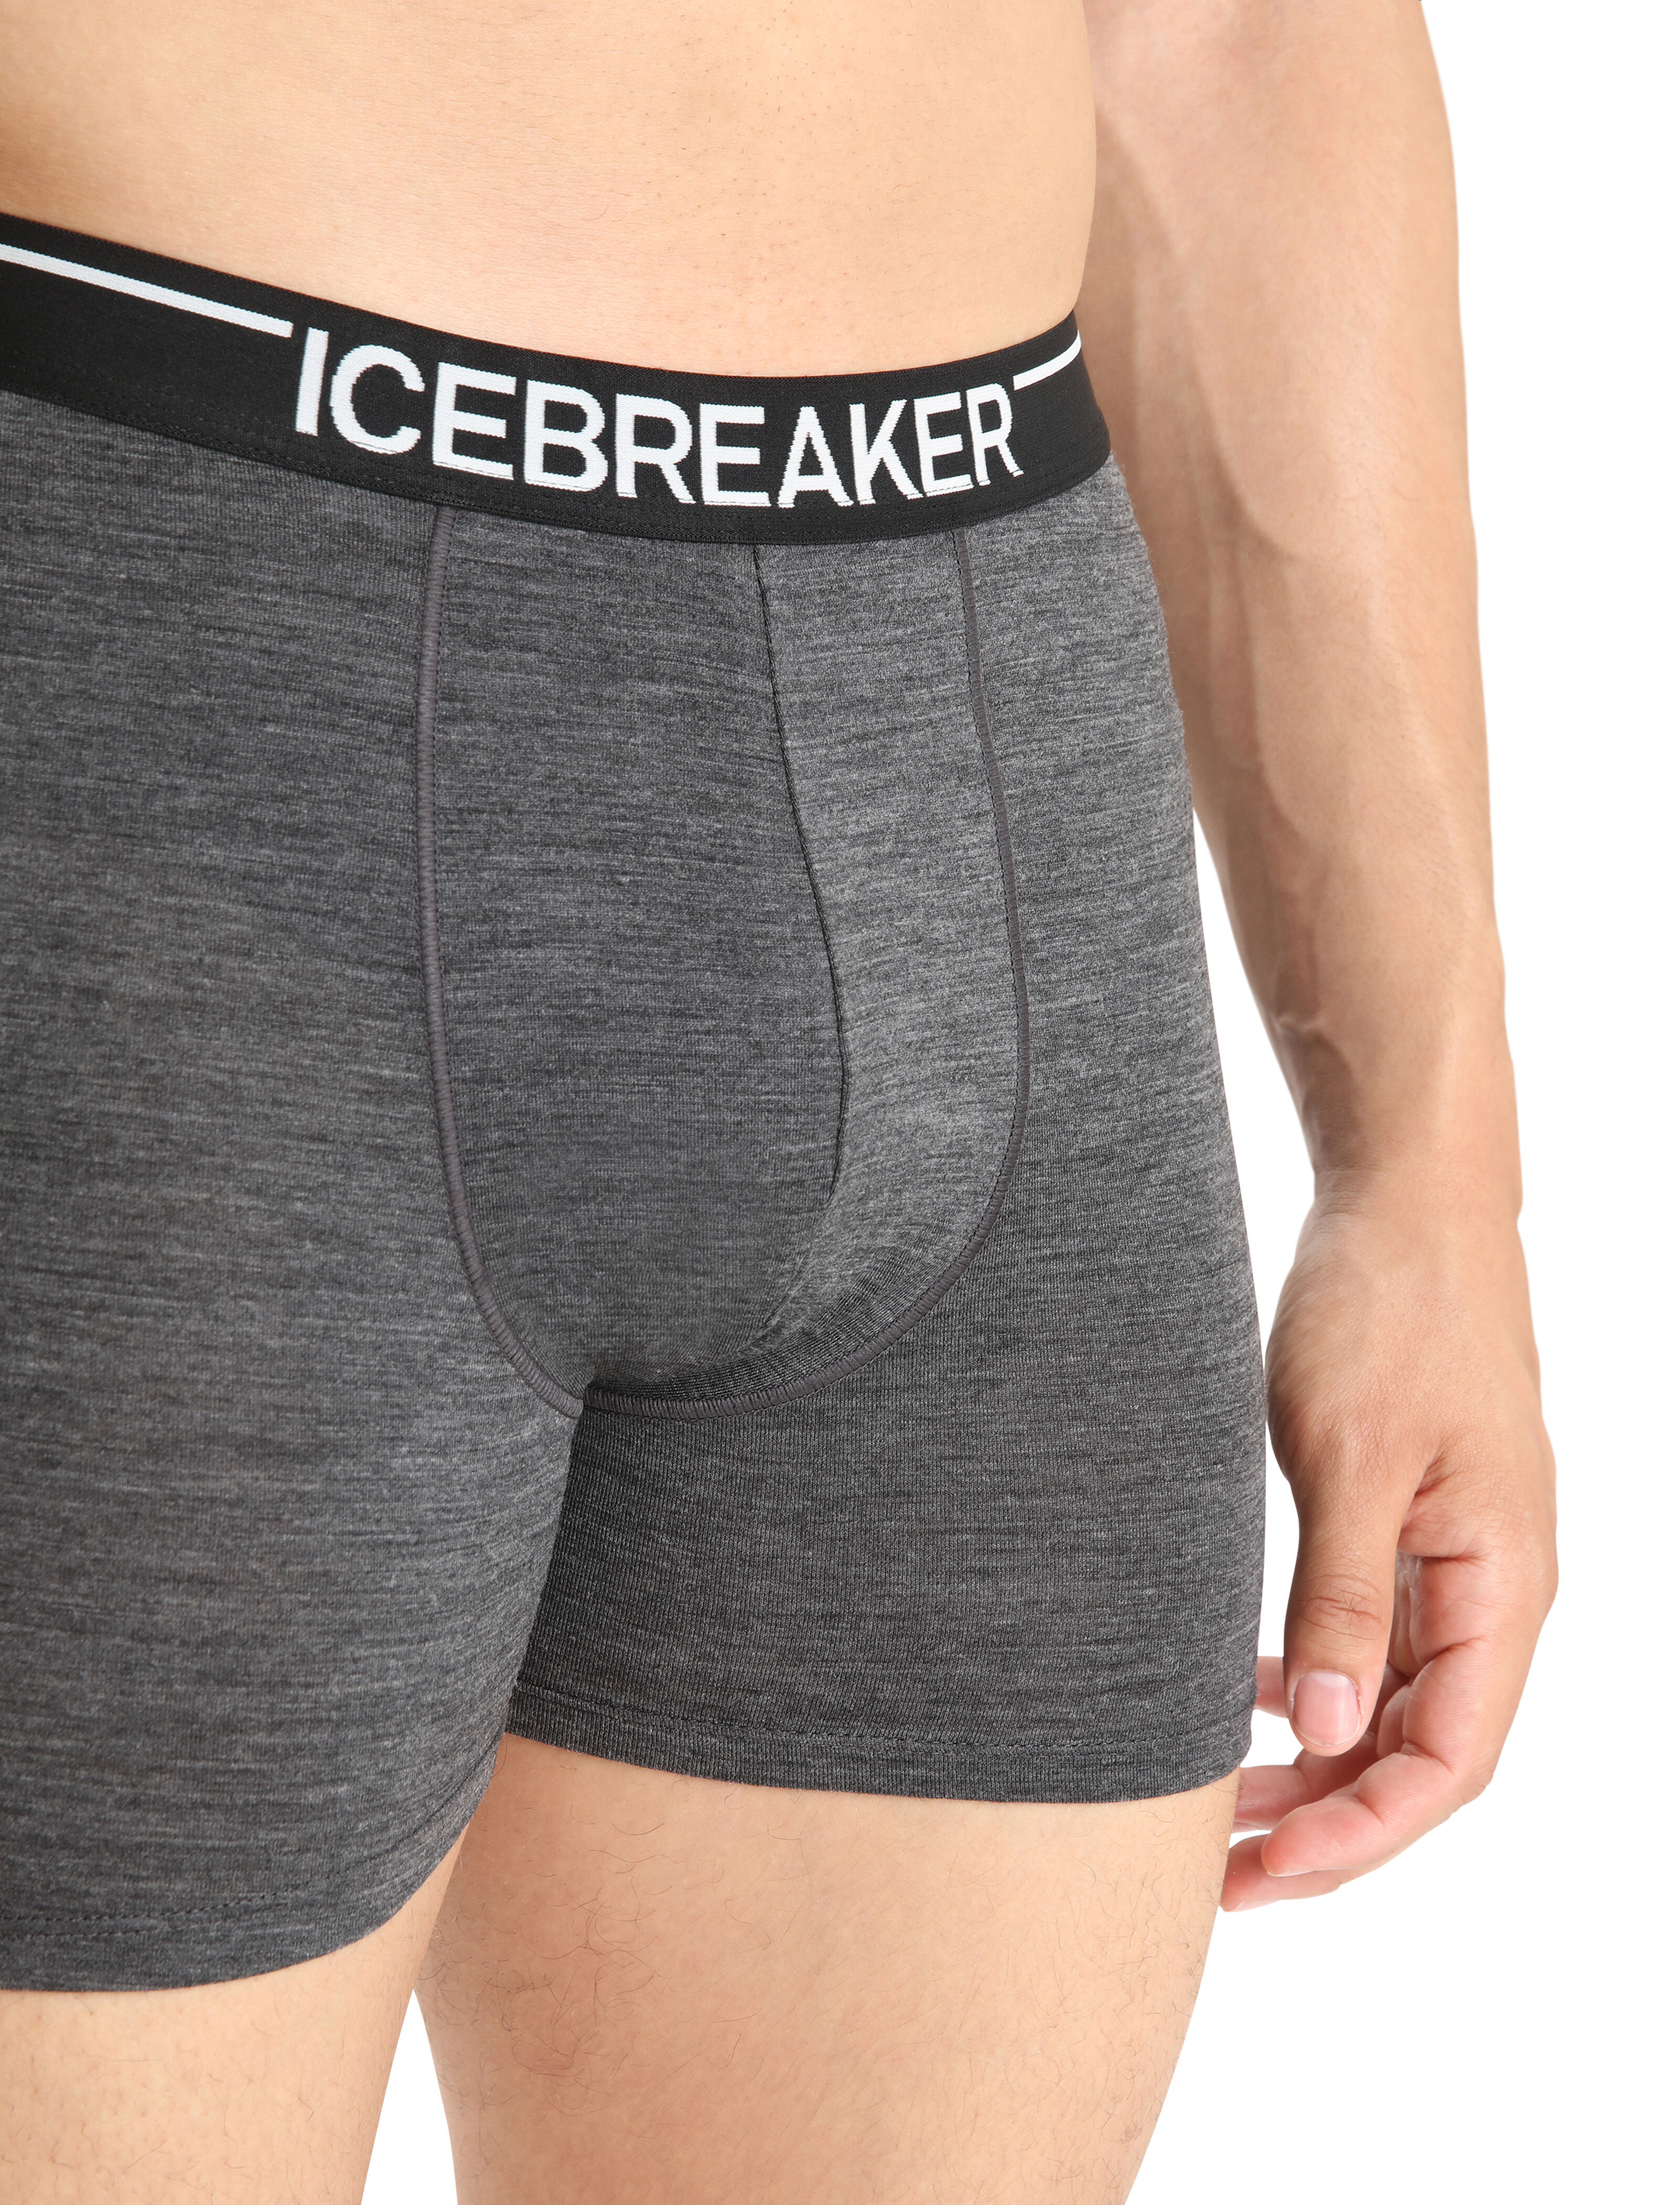 Icebreaker Icebreaker Anatomica Boxers Herren Shorts Boxershorts Unterhose anthrazit 